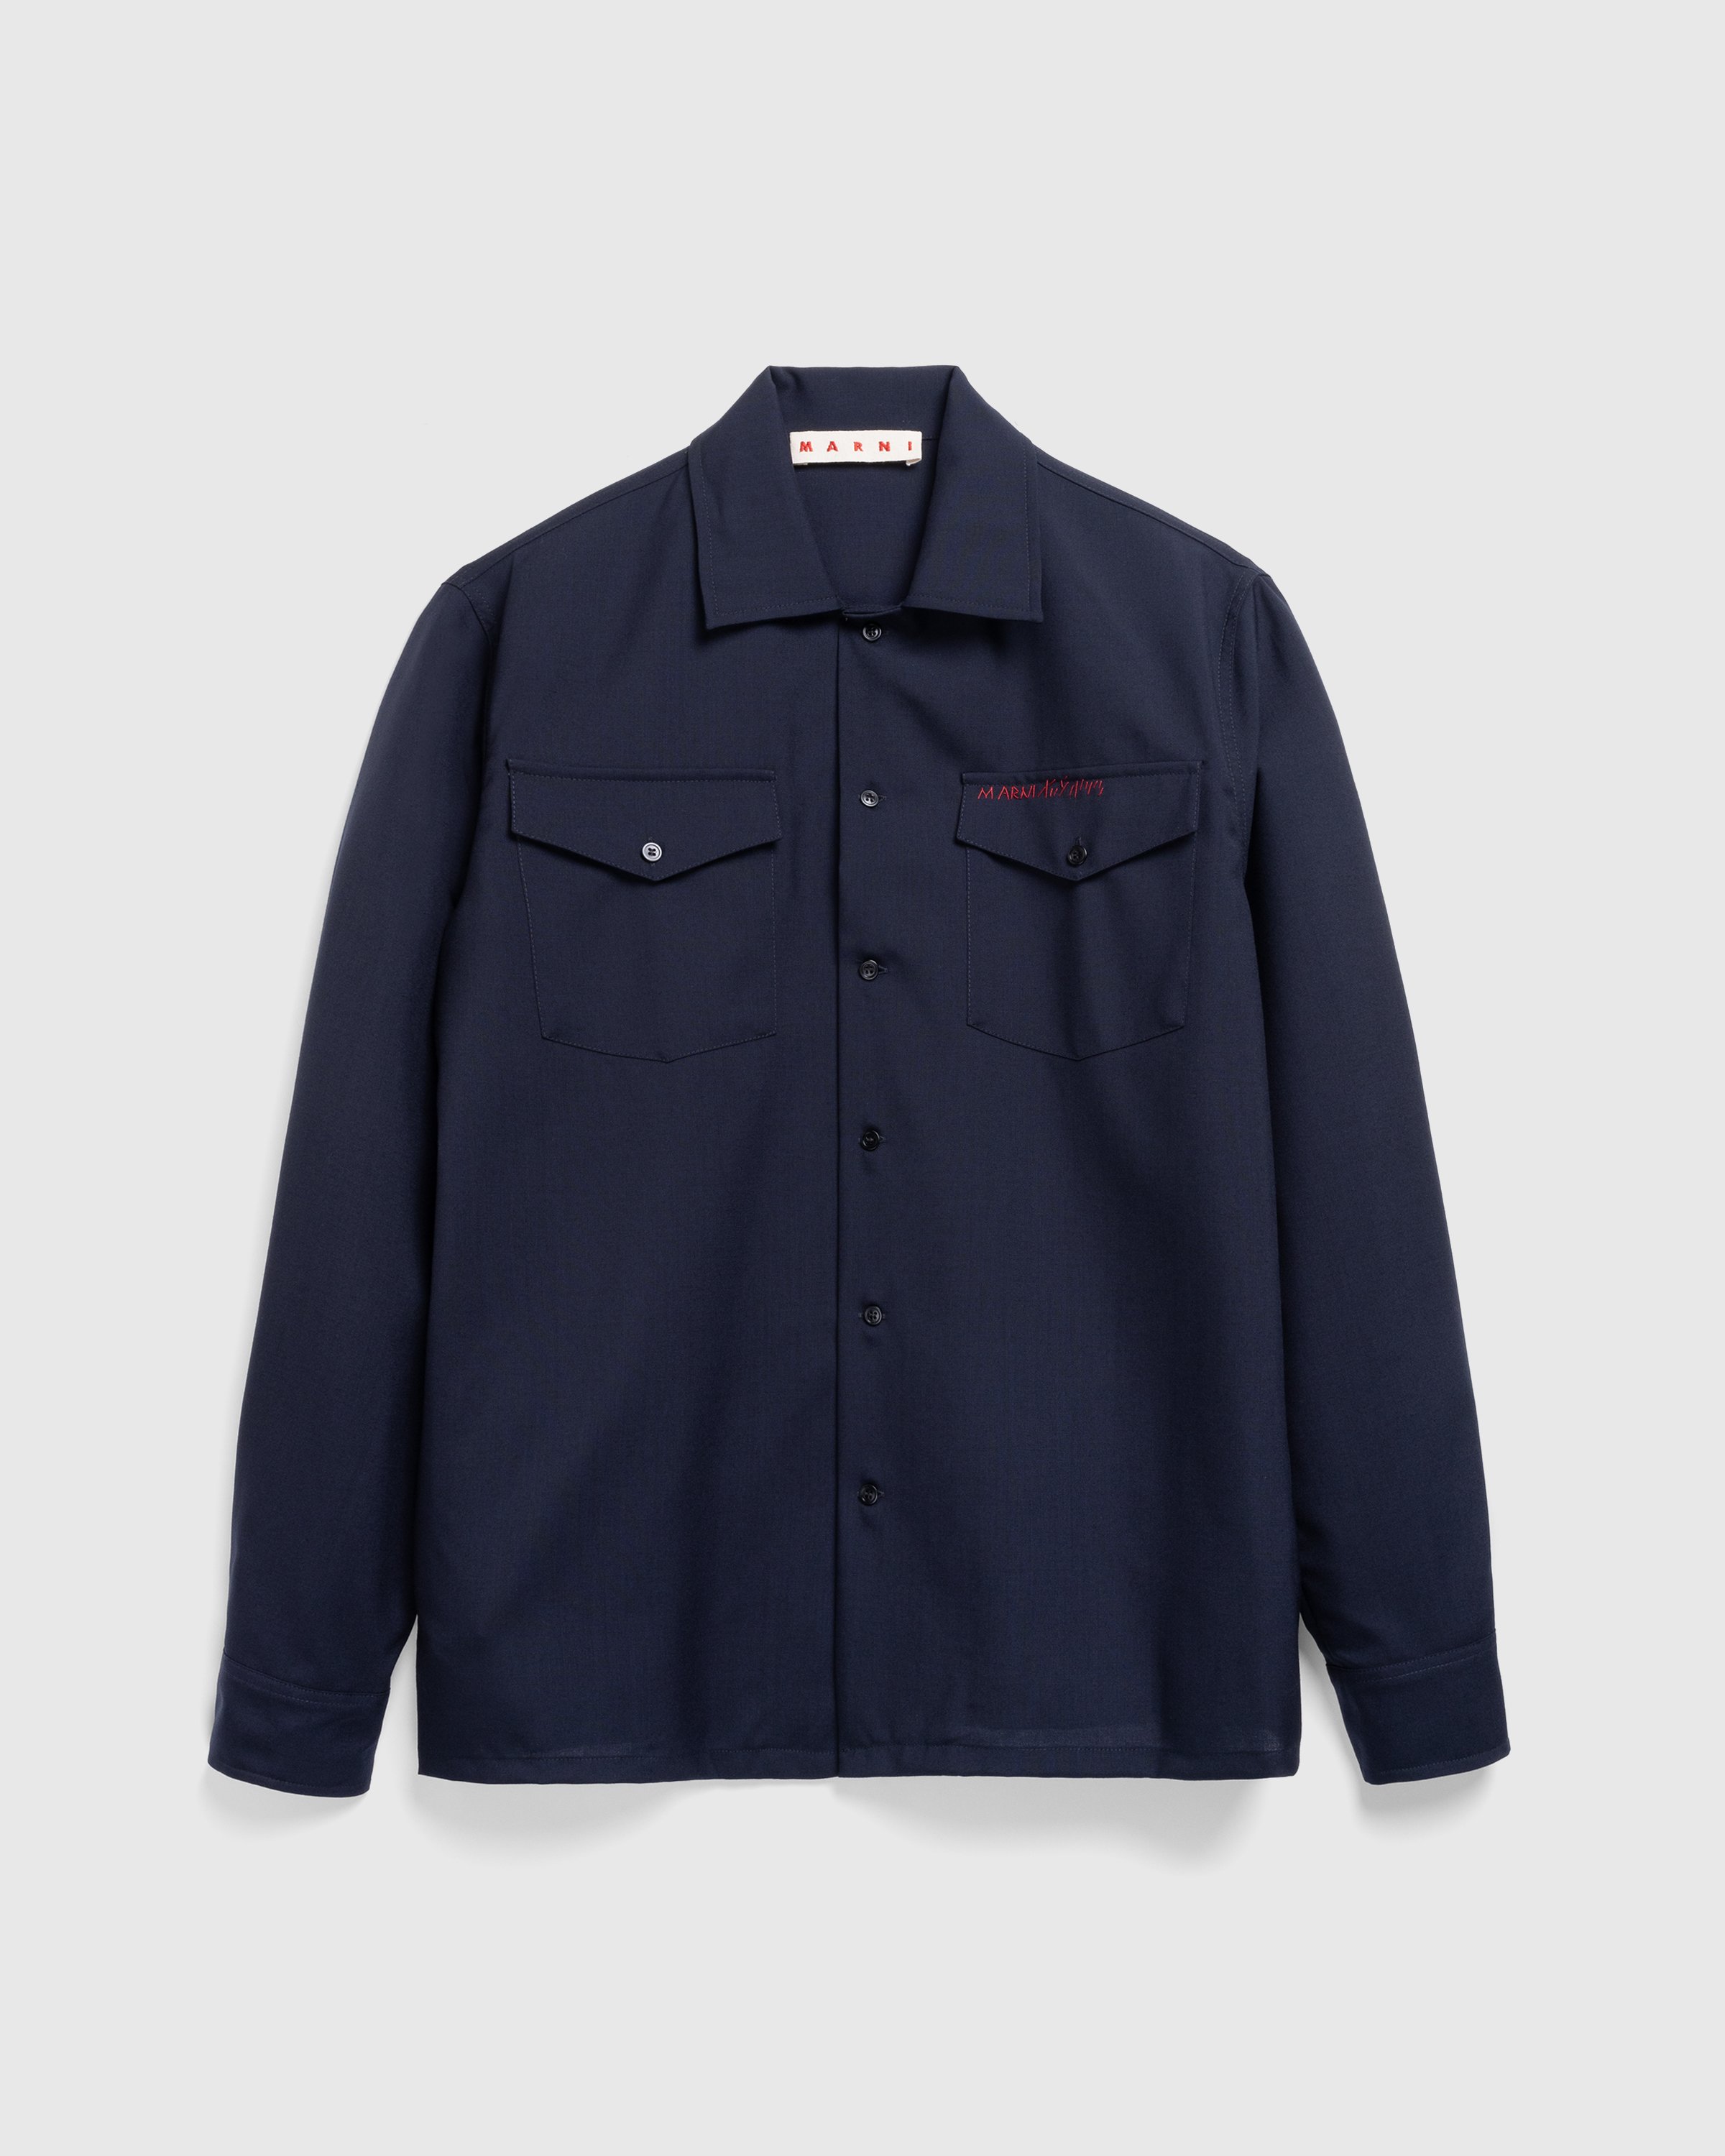 Marni – L/S Virgin Wool Shirt Blue Black - Longsleeve Shirts - Blue - Image 1